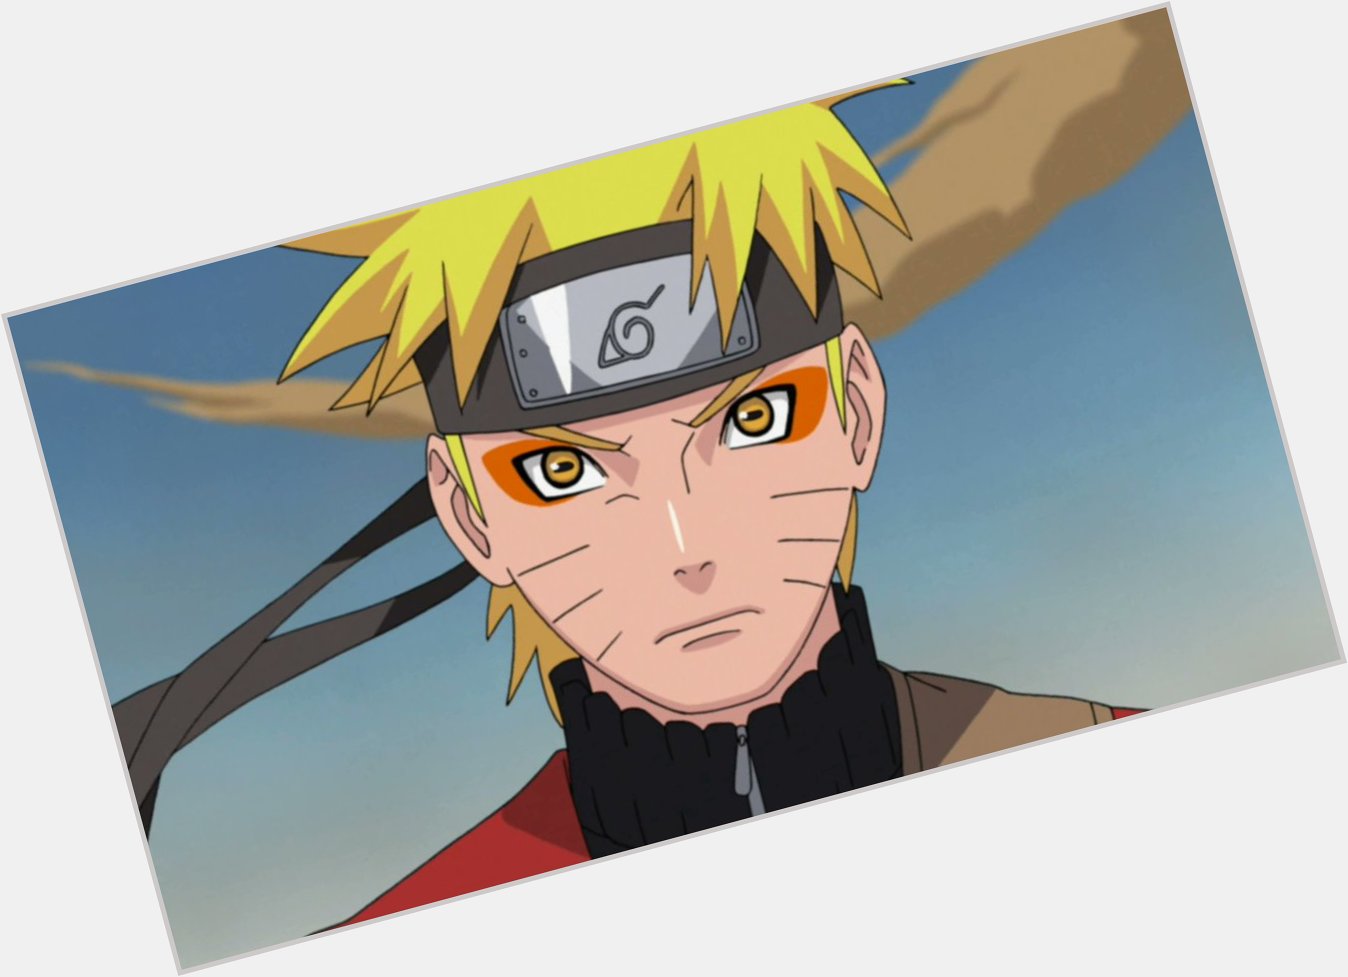 Happy Birthday Naruto uzumaki, the greatest MC of all timeeeee   